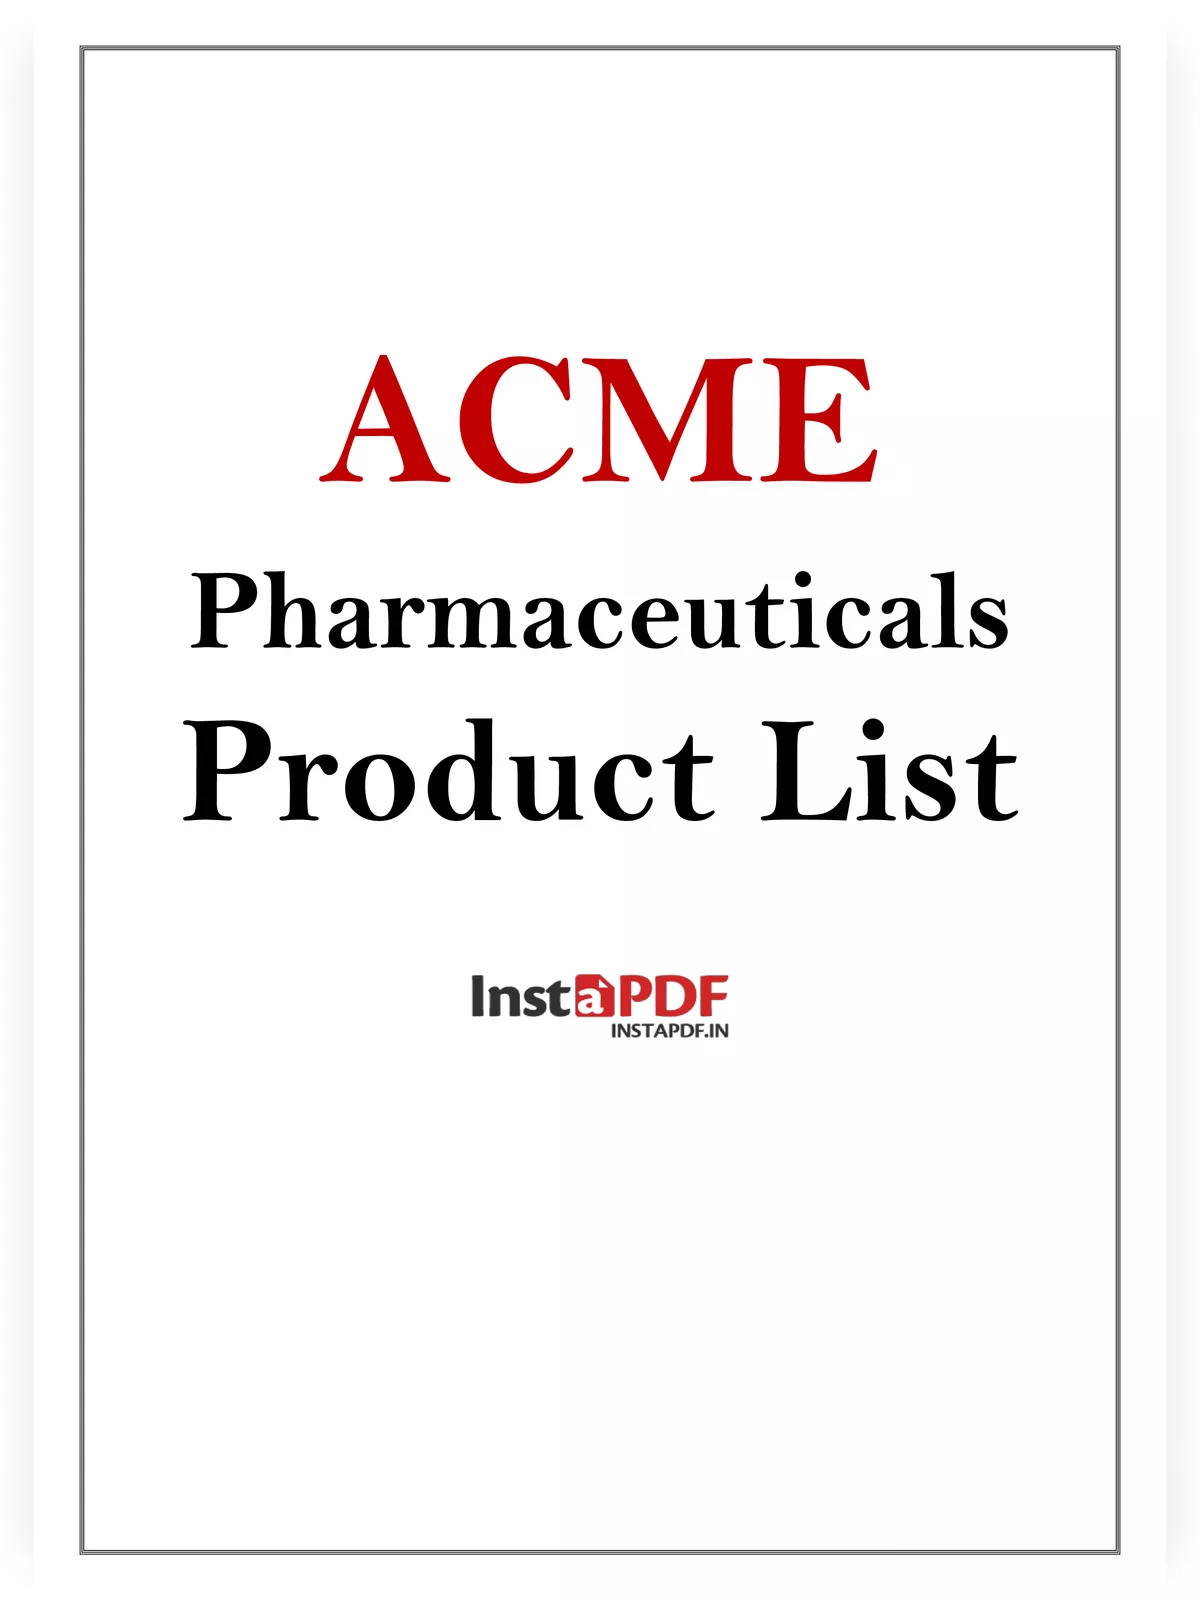 ACME Pharmaceuticals Product List